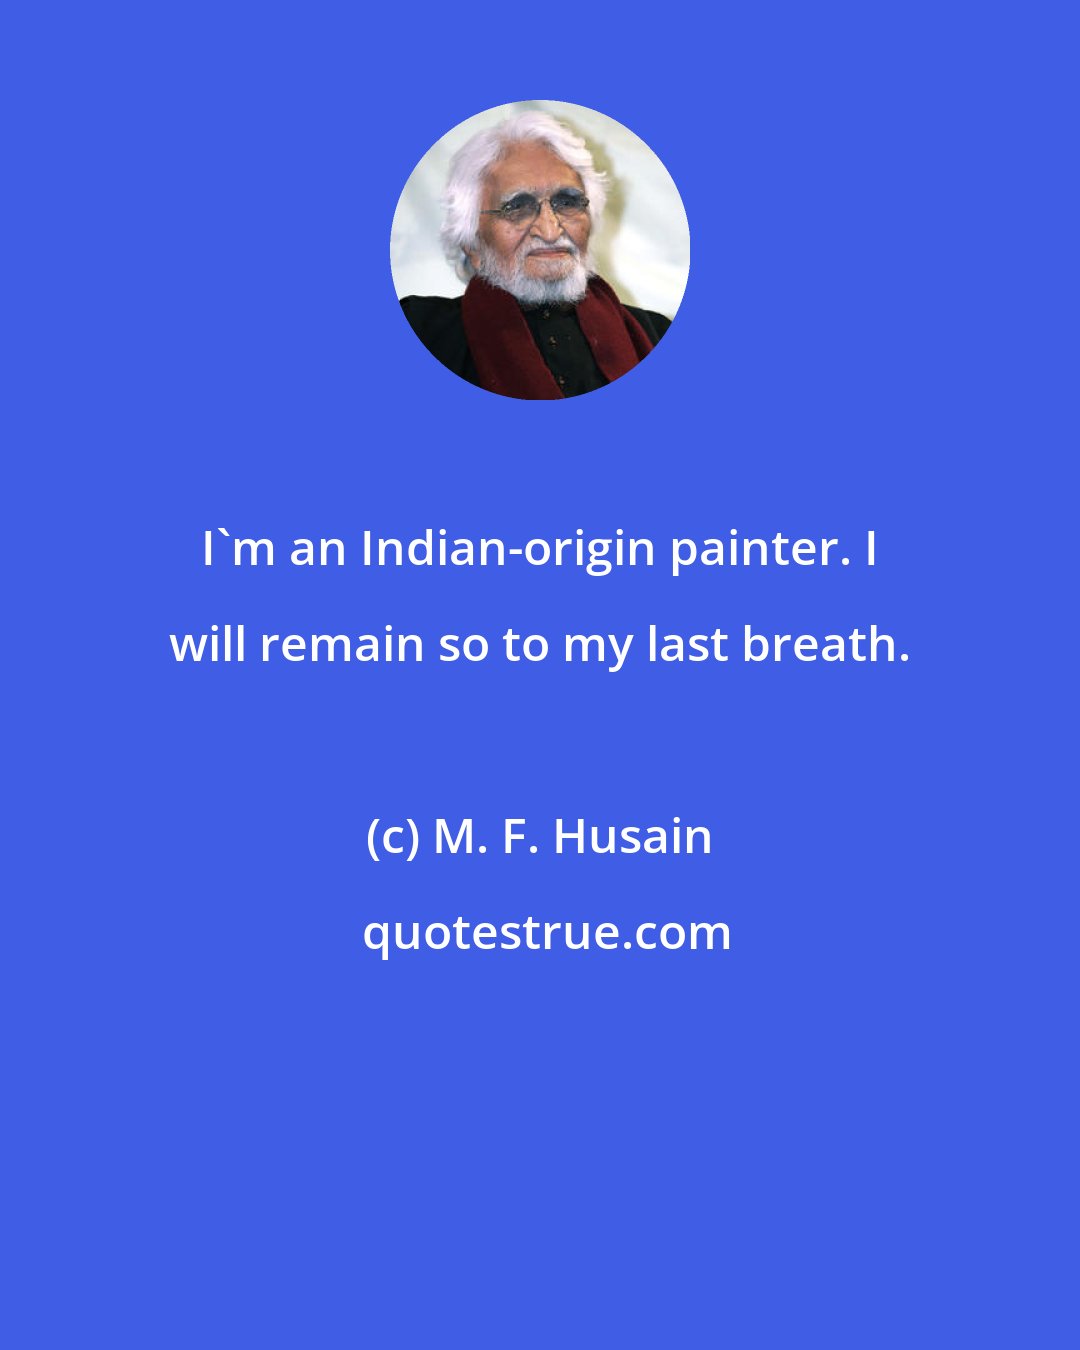 M. F. Husain: I'm an Indian-origin painter. I will remain so to my last breath.